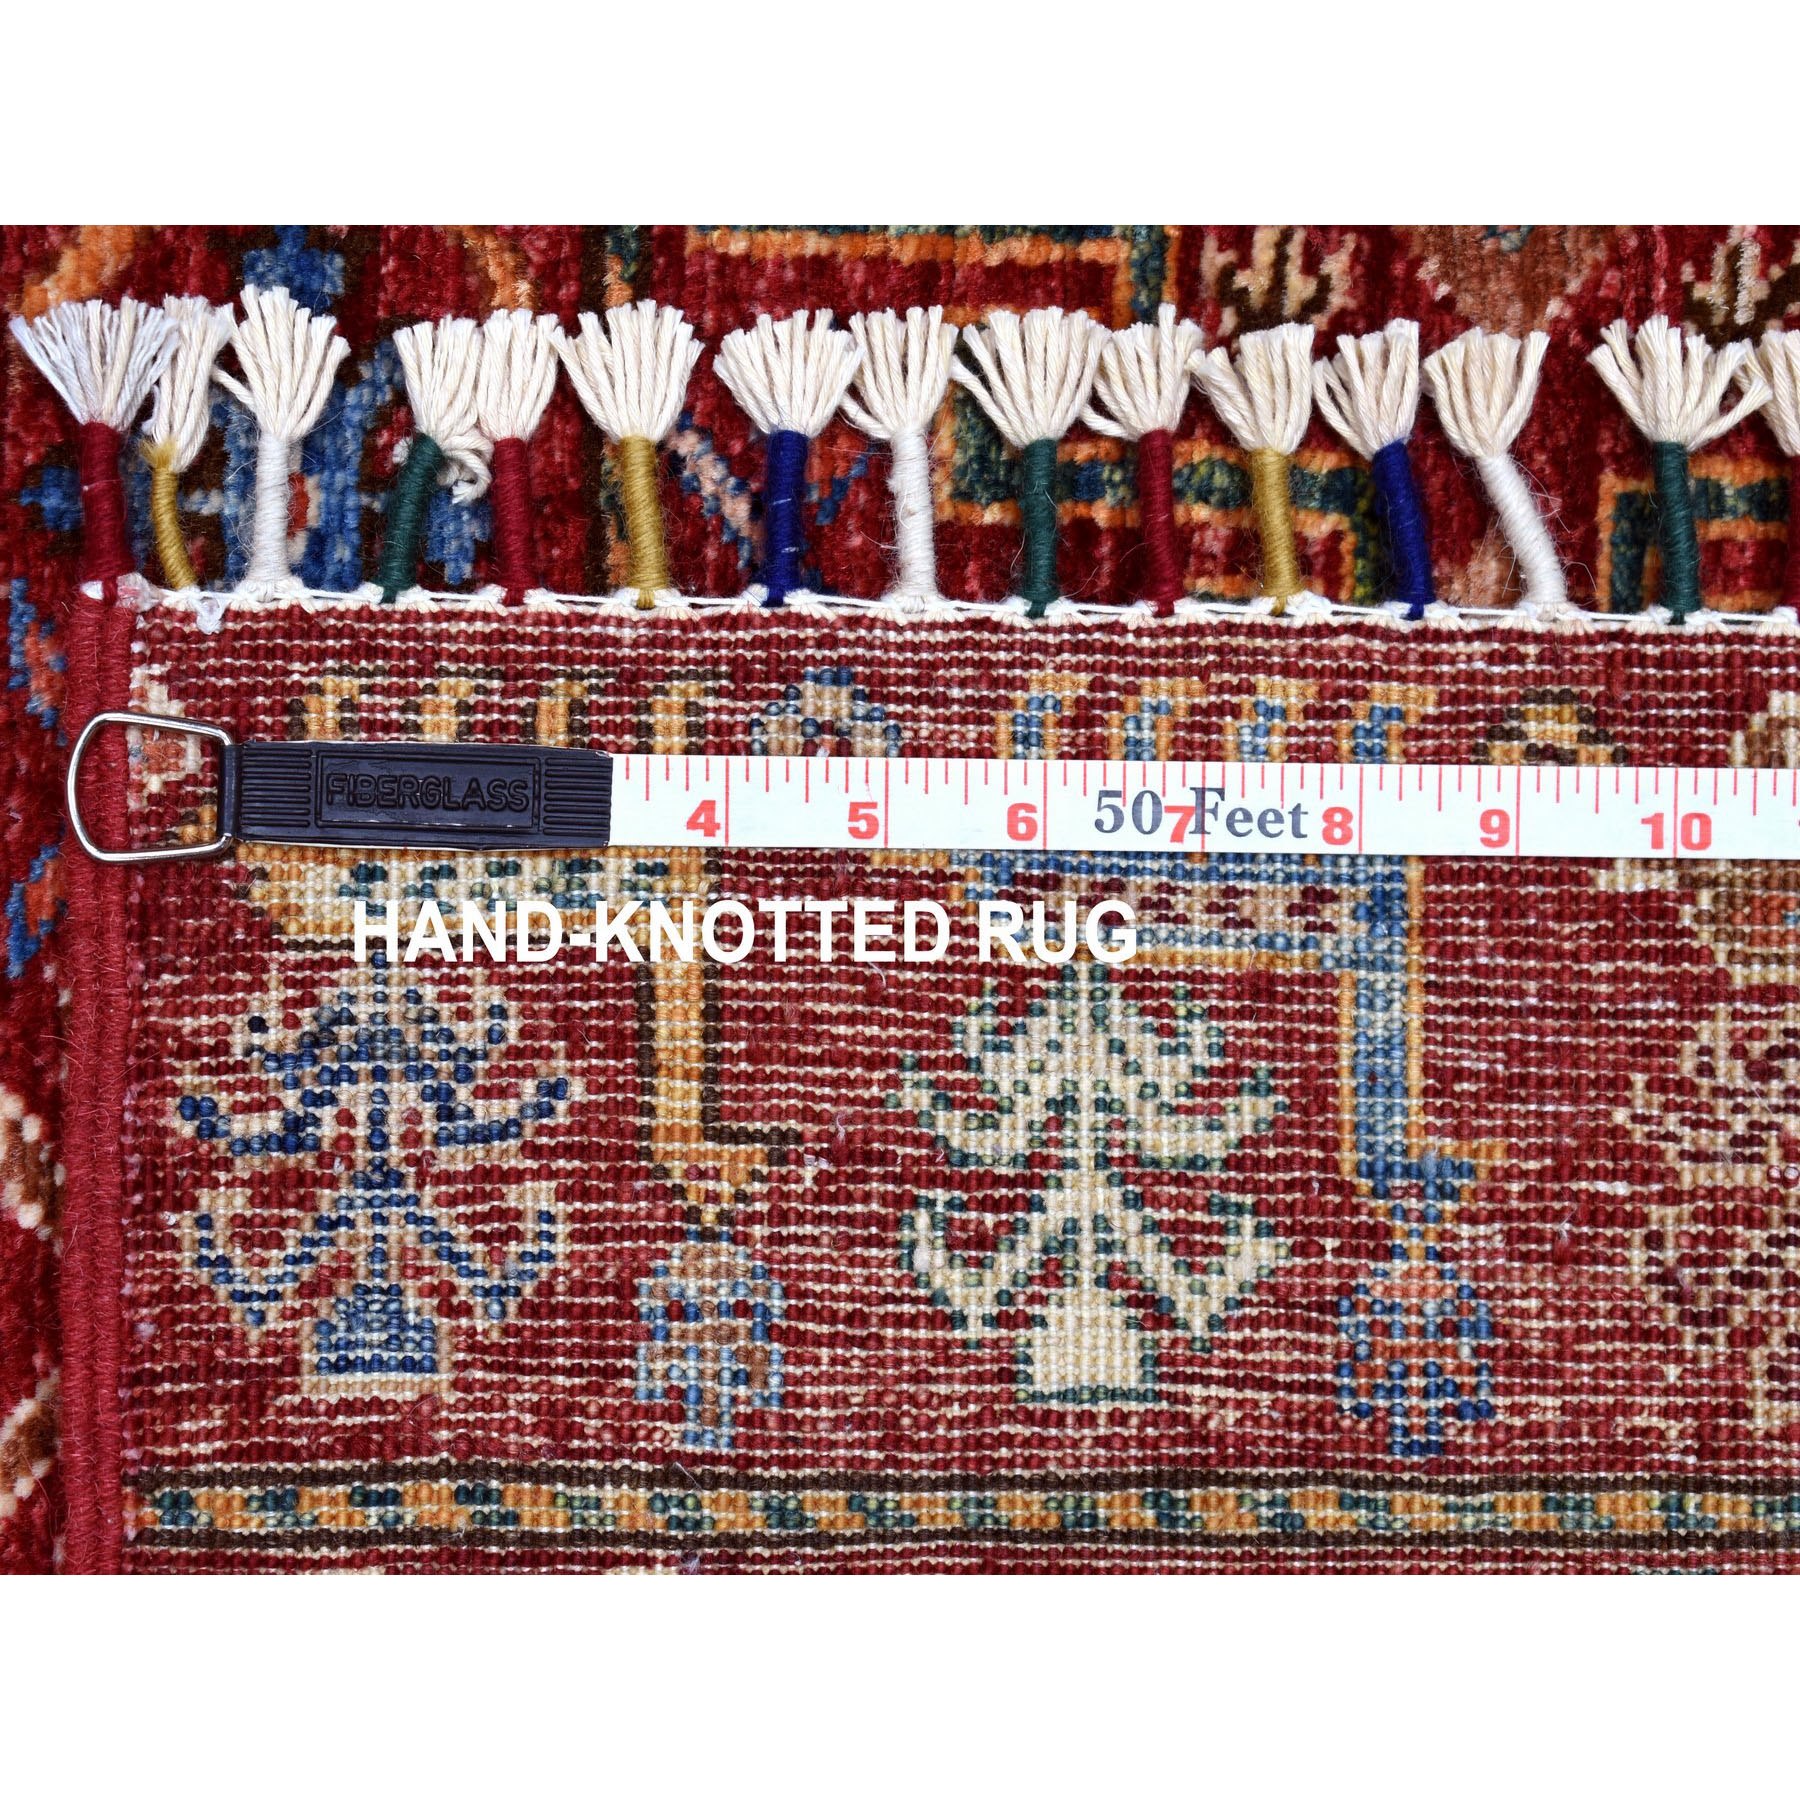 2-5 x6-9  Red Khorjin Design Runner Super Kazak Geometric Pure Wool Hand Knotted Oriental Rug 